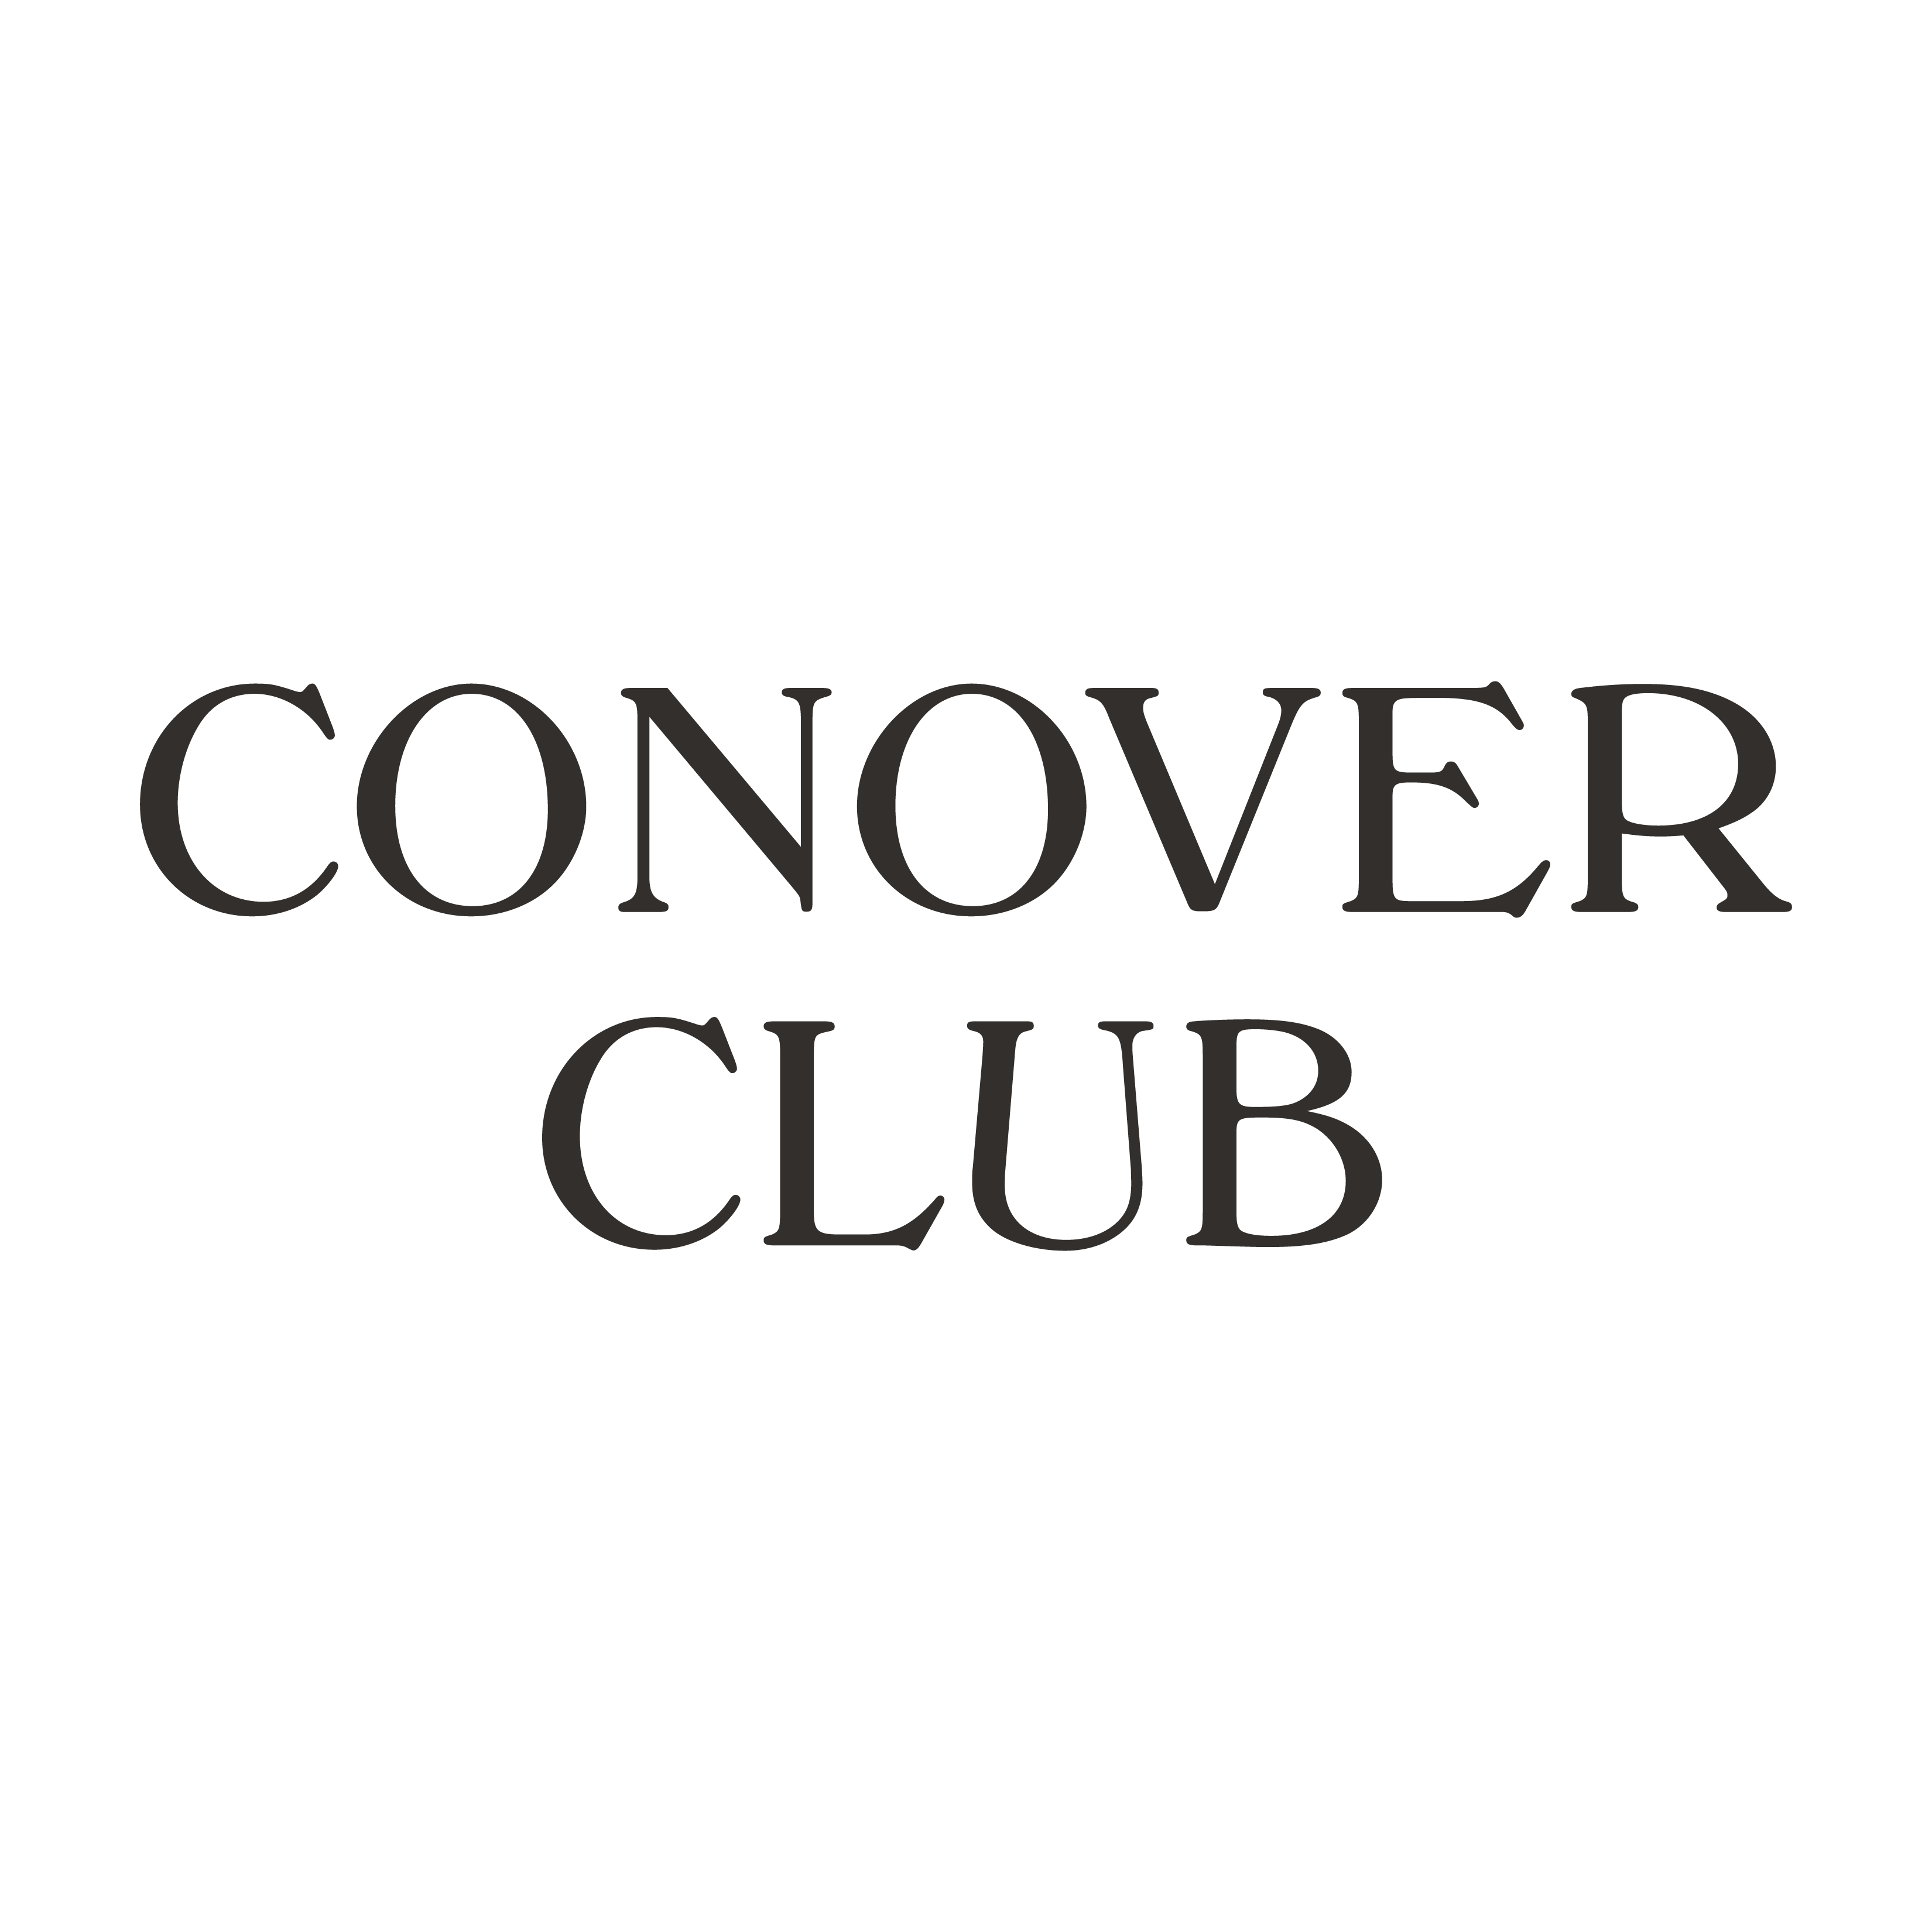 Conover Club